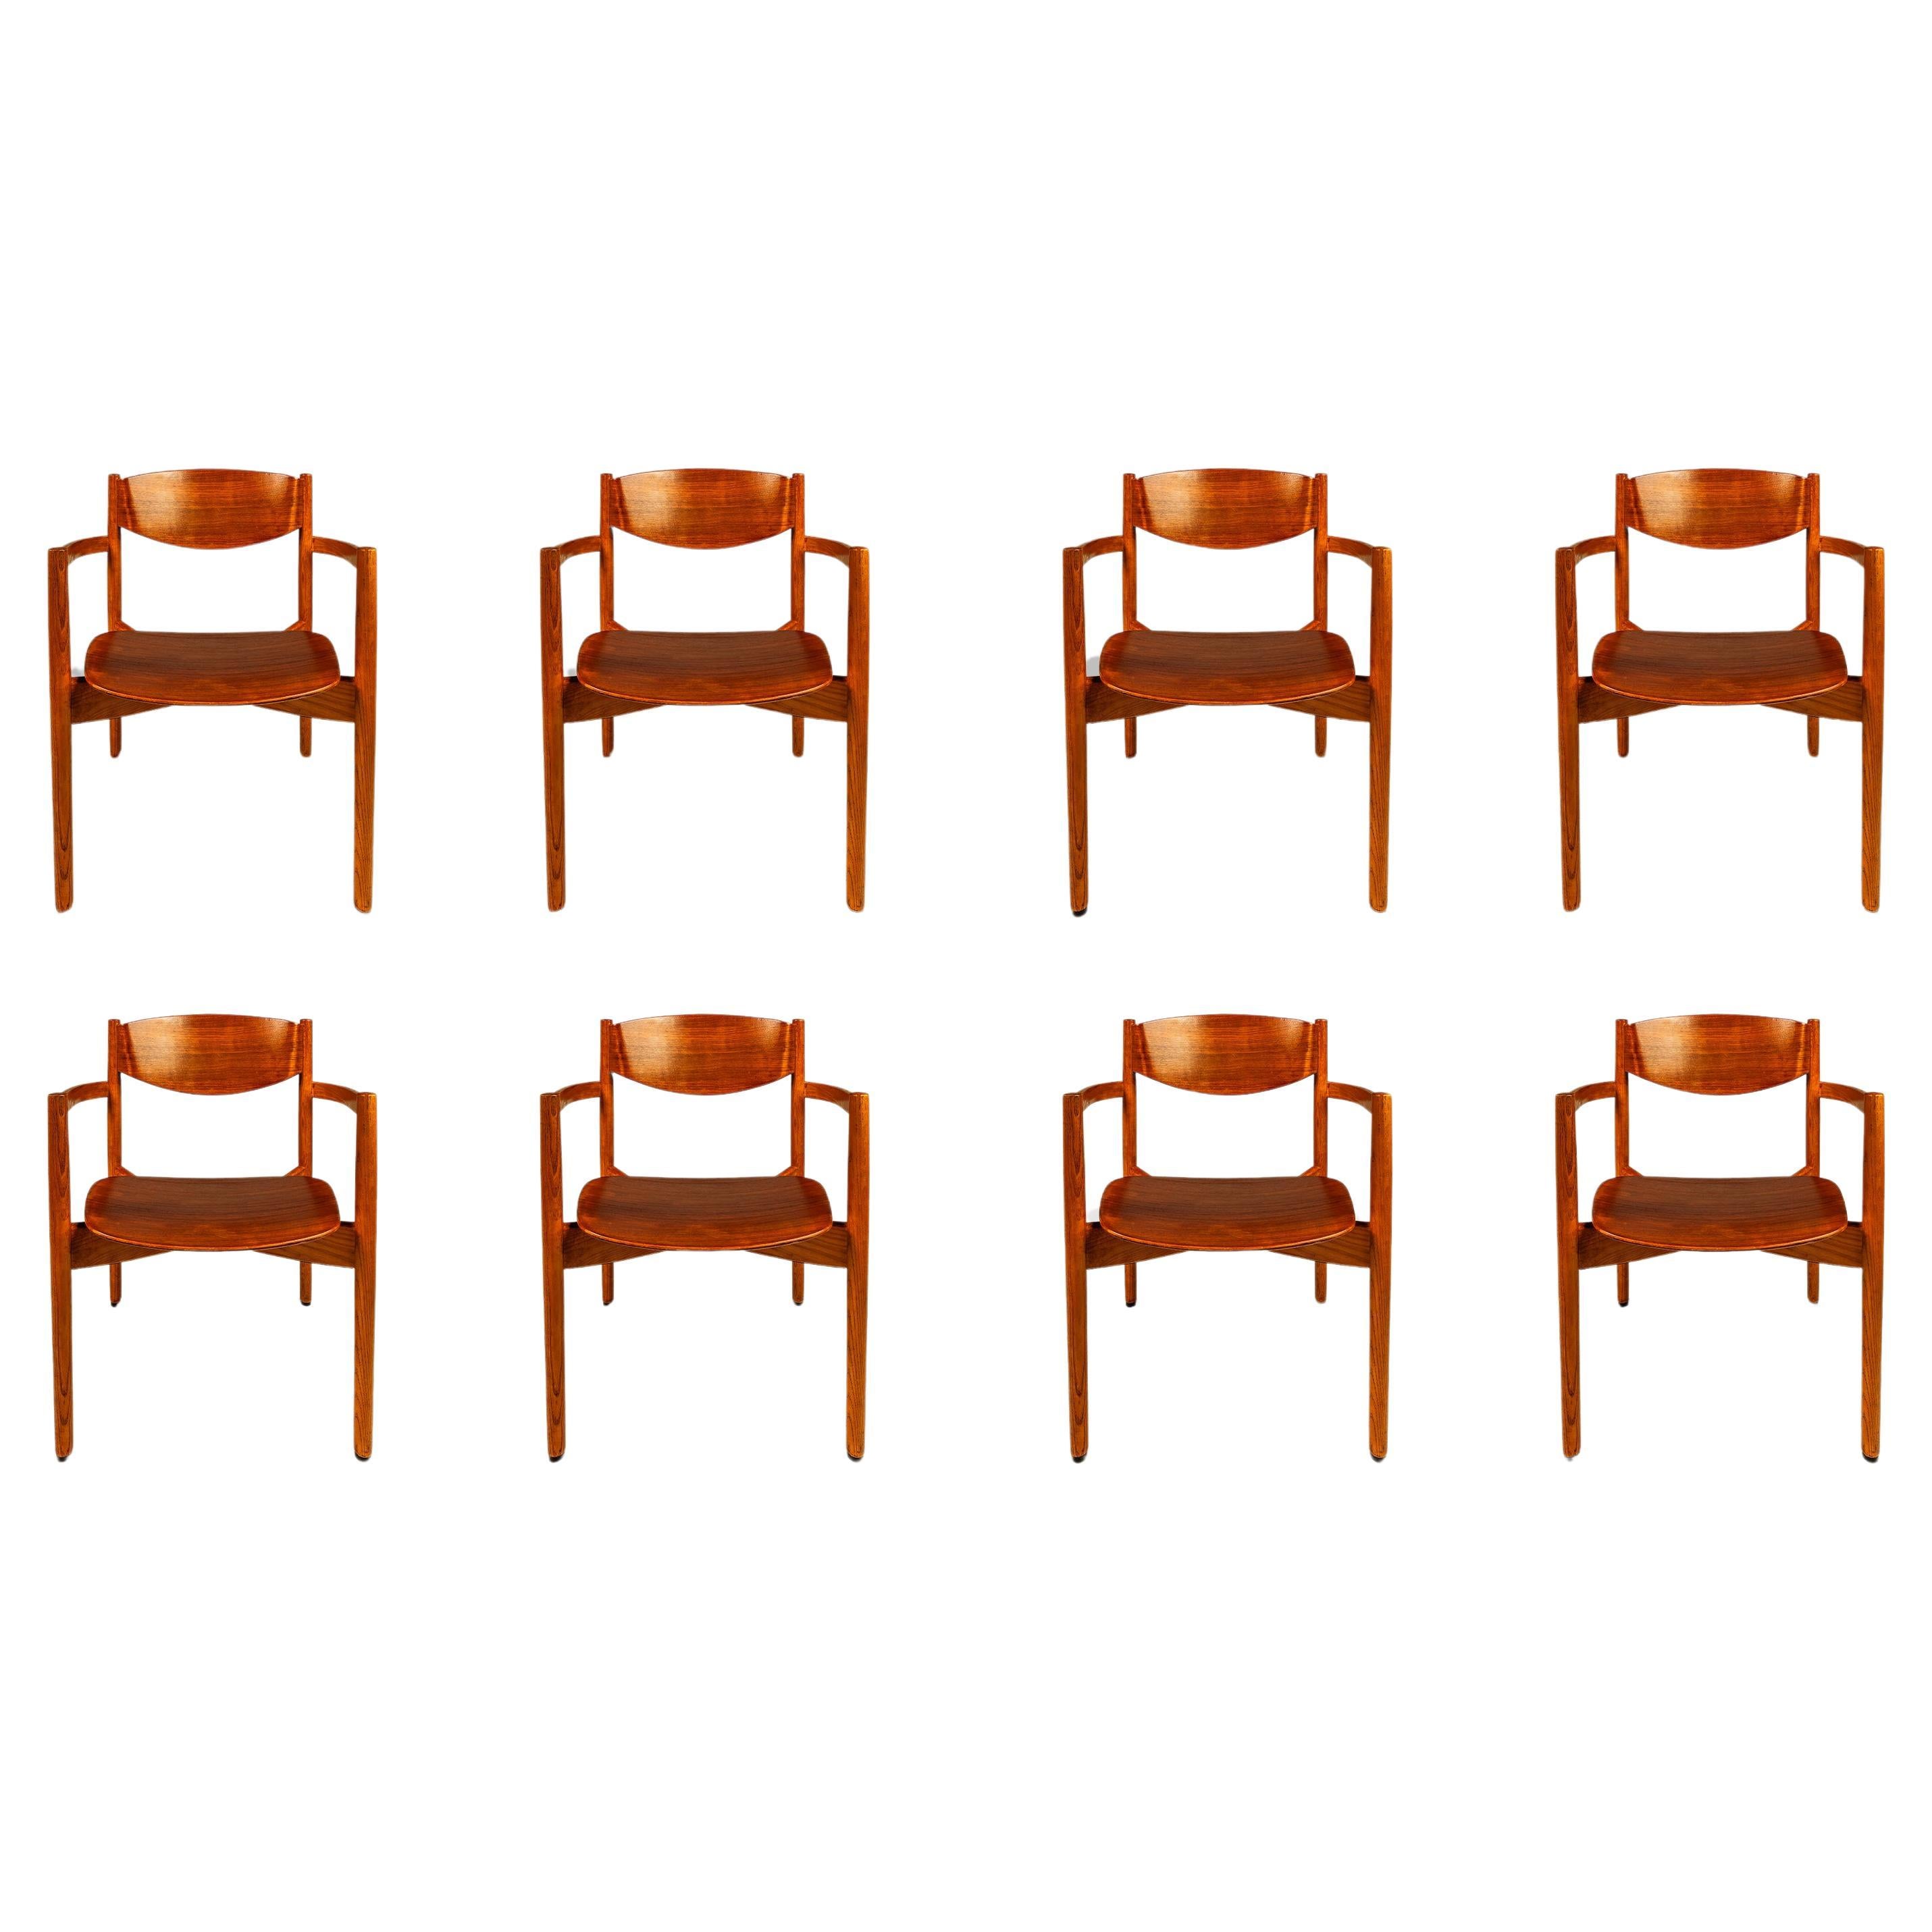 Set of 8 Mid-Century Stacking Chairs: Oak & Walnut, Jens Risom Design, USA, 1960